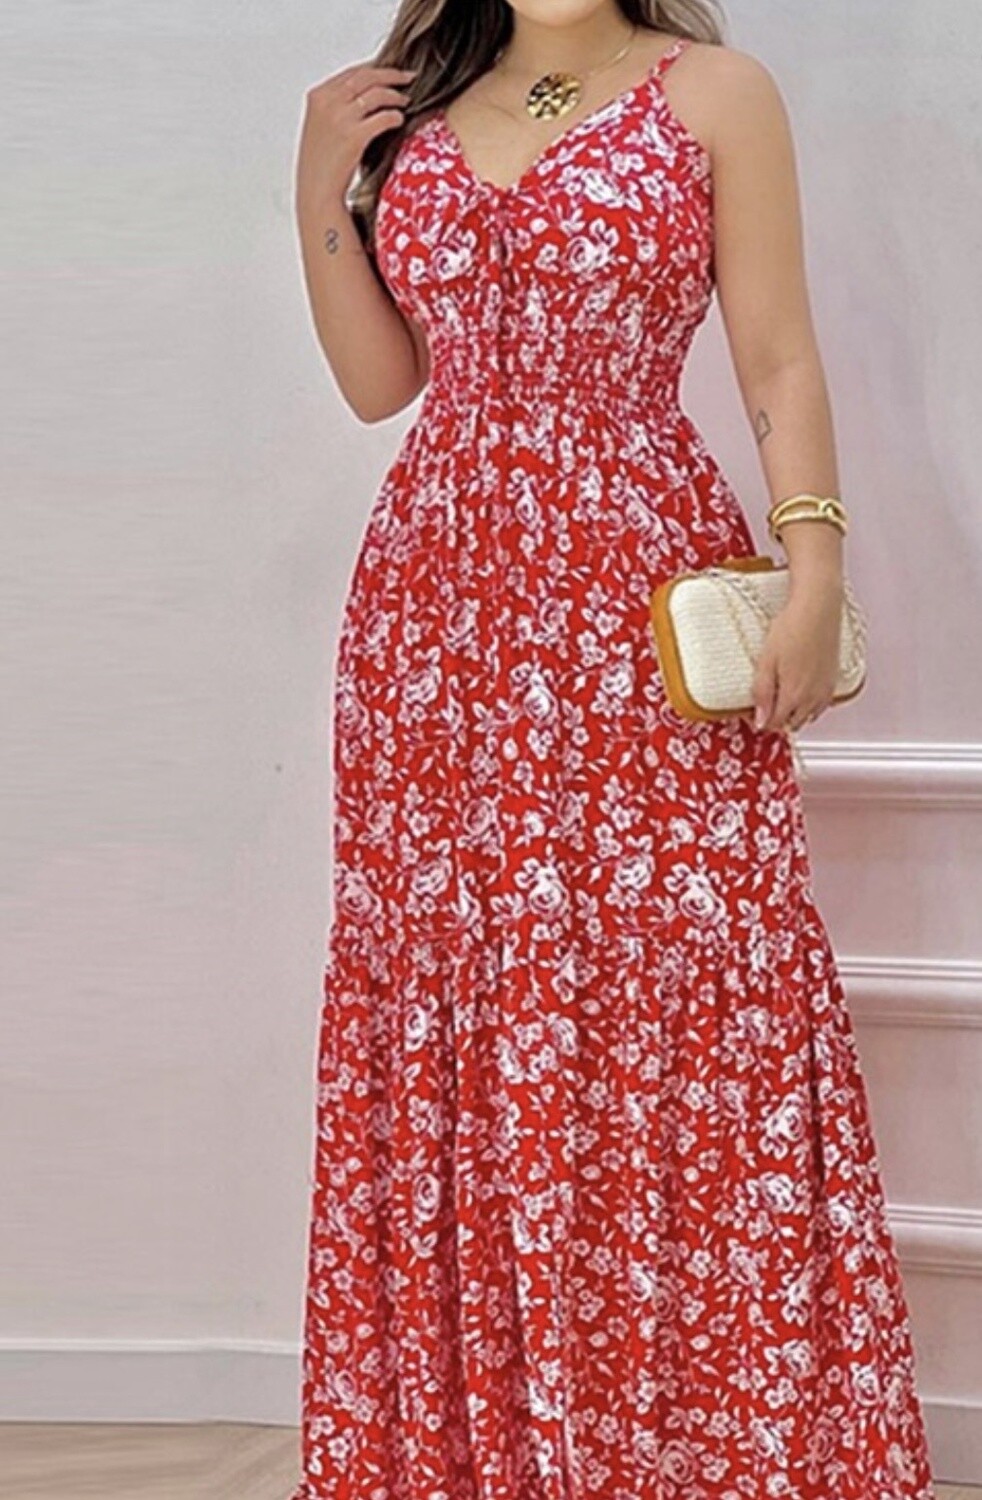 Summer Red Dress Spagetti Dress